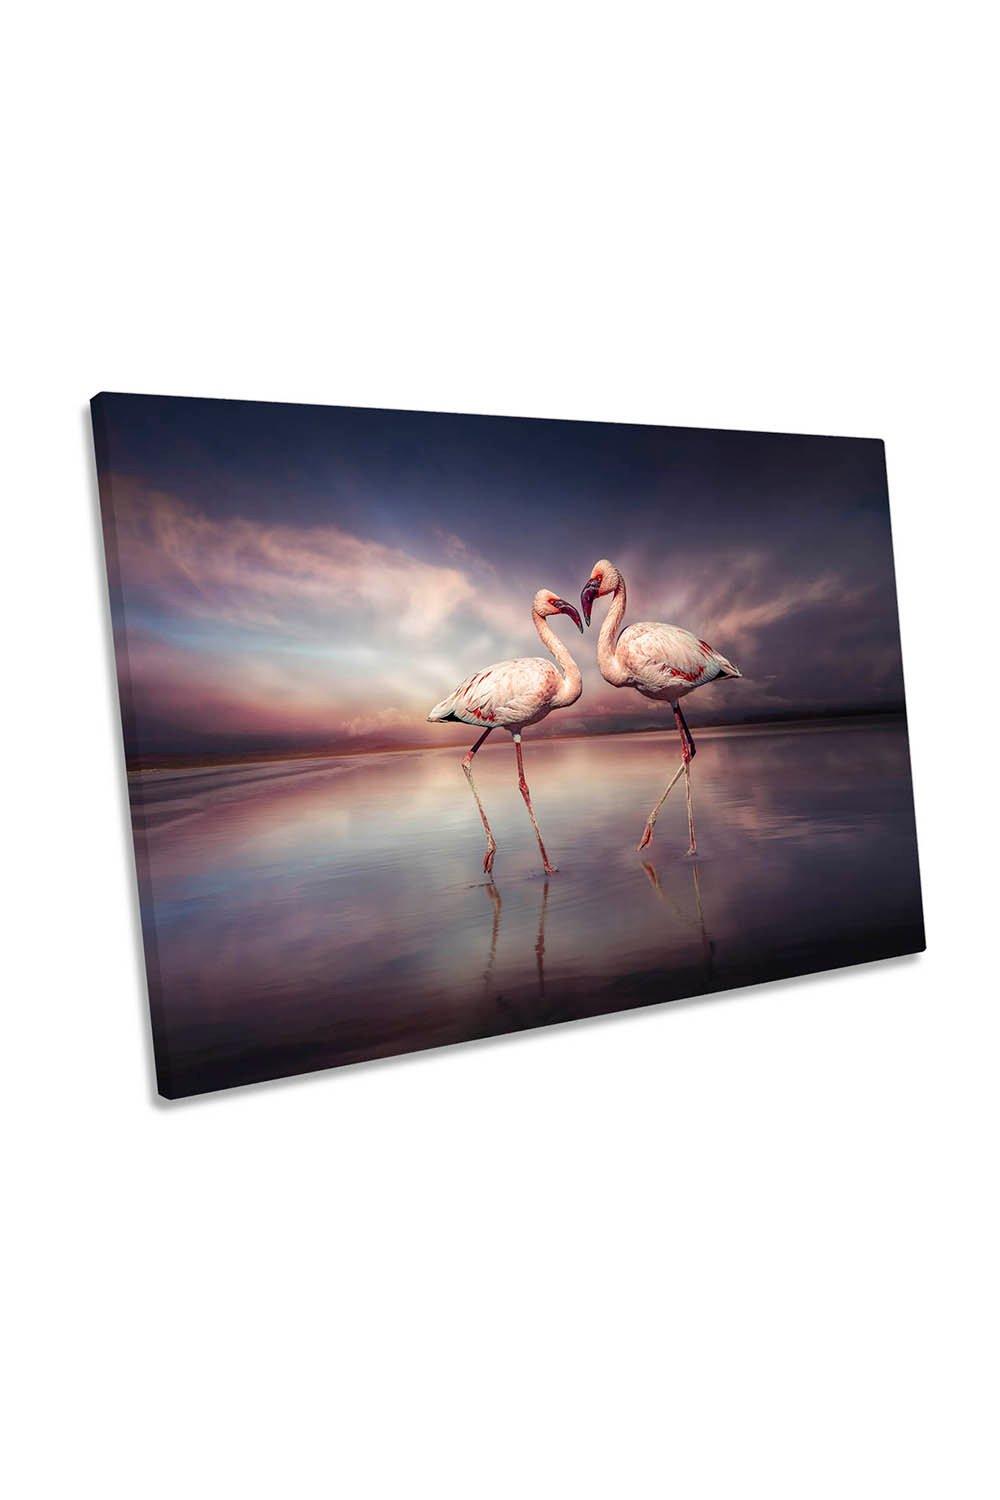 Flamingo Love Birds Lake Canvas Wall Art Picture Print